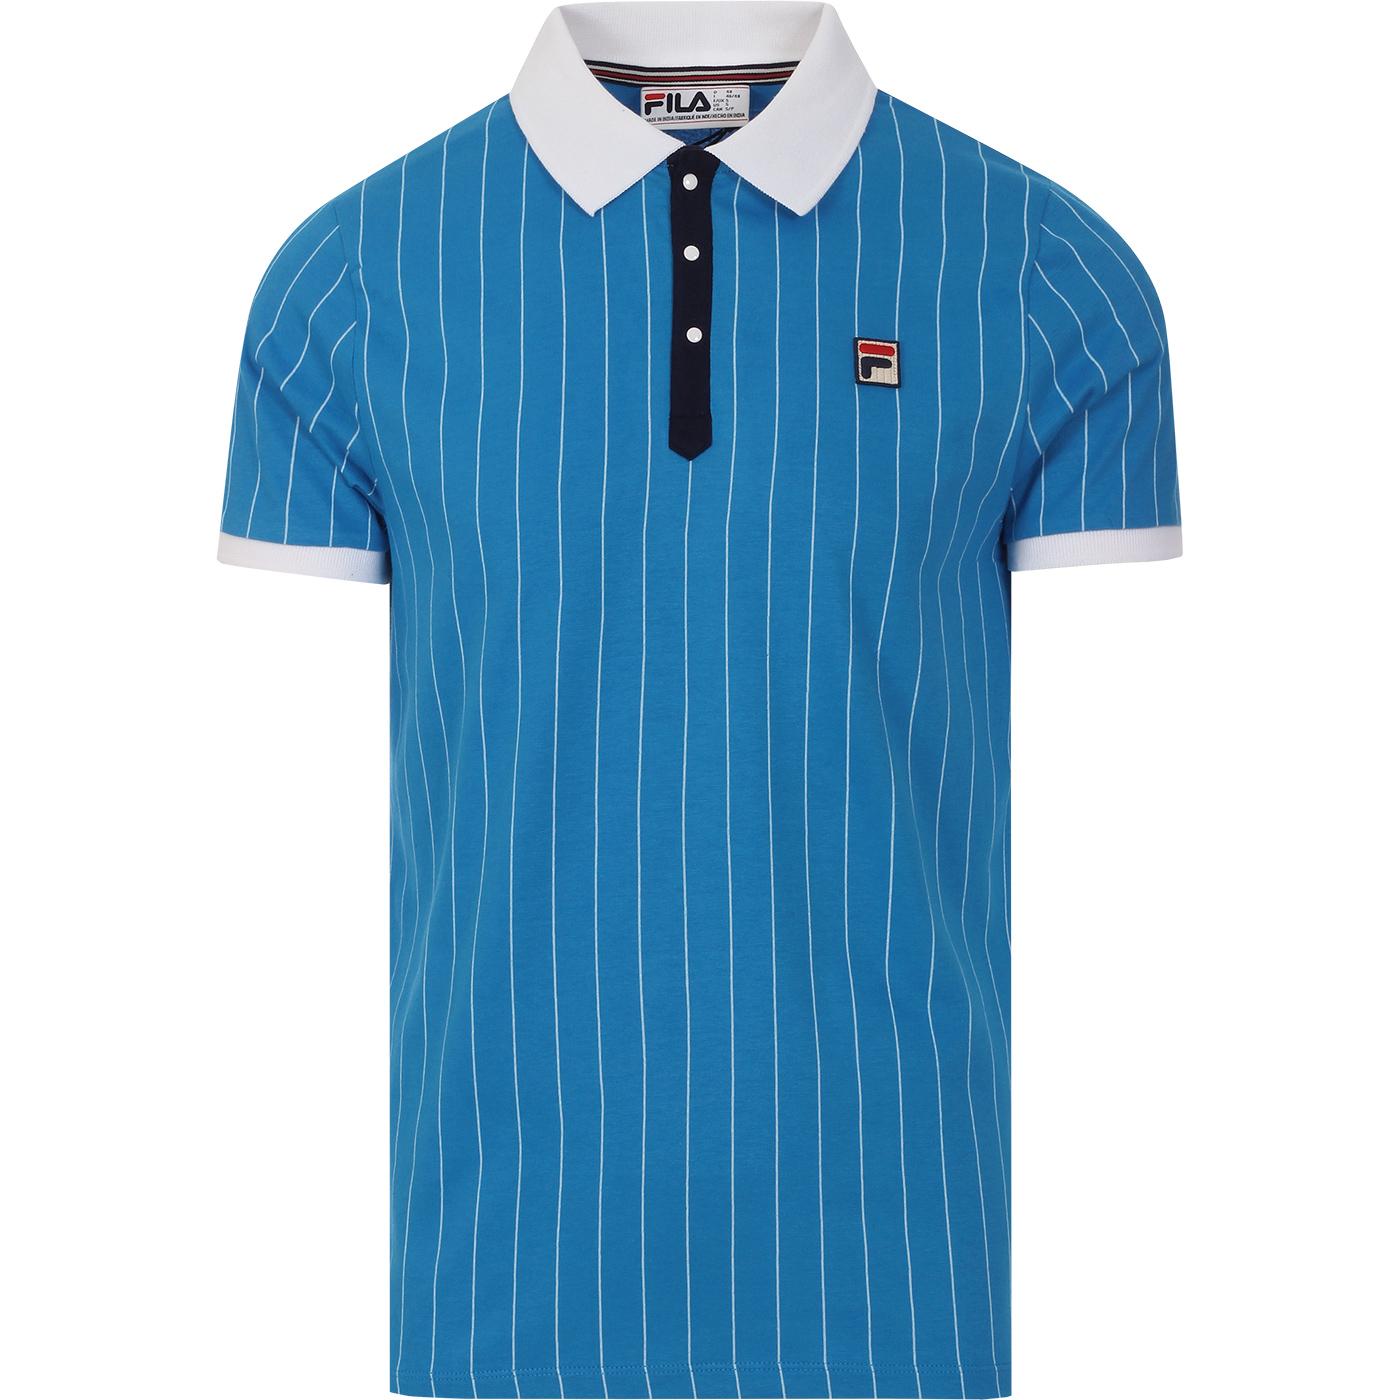 FILA VINTAGE BB1 70s Borg Tennis Polo Shirt Blue Aster